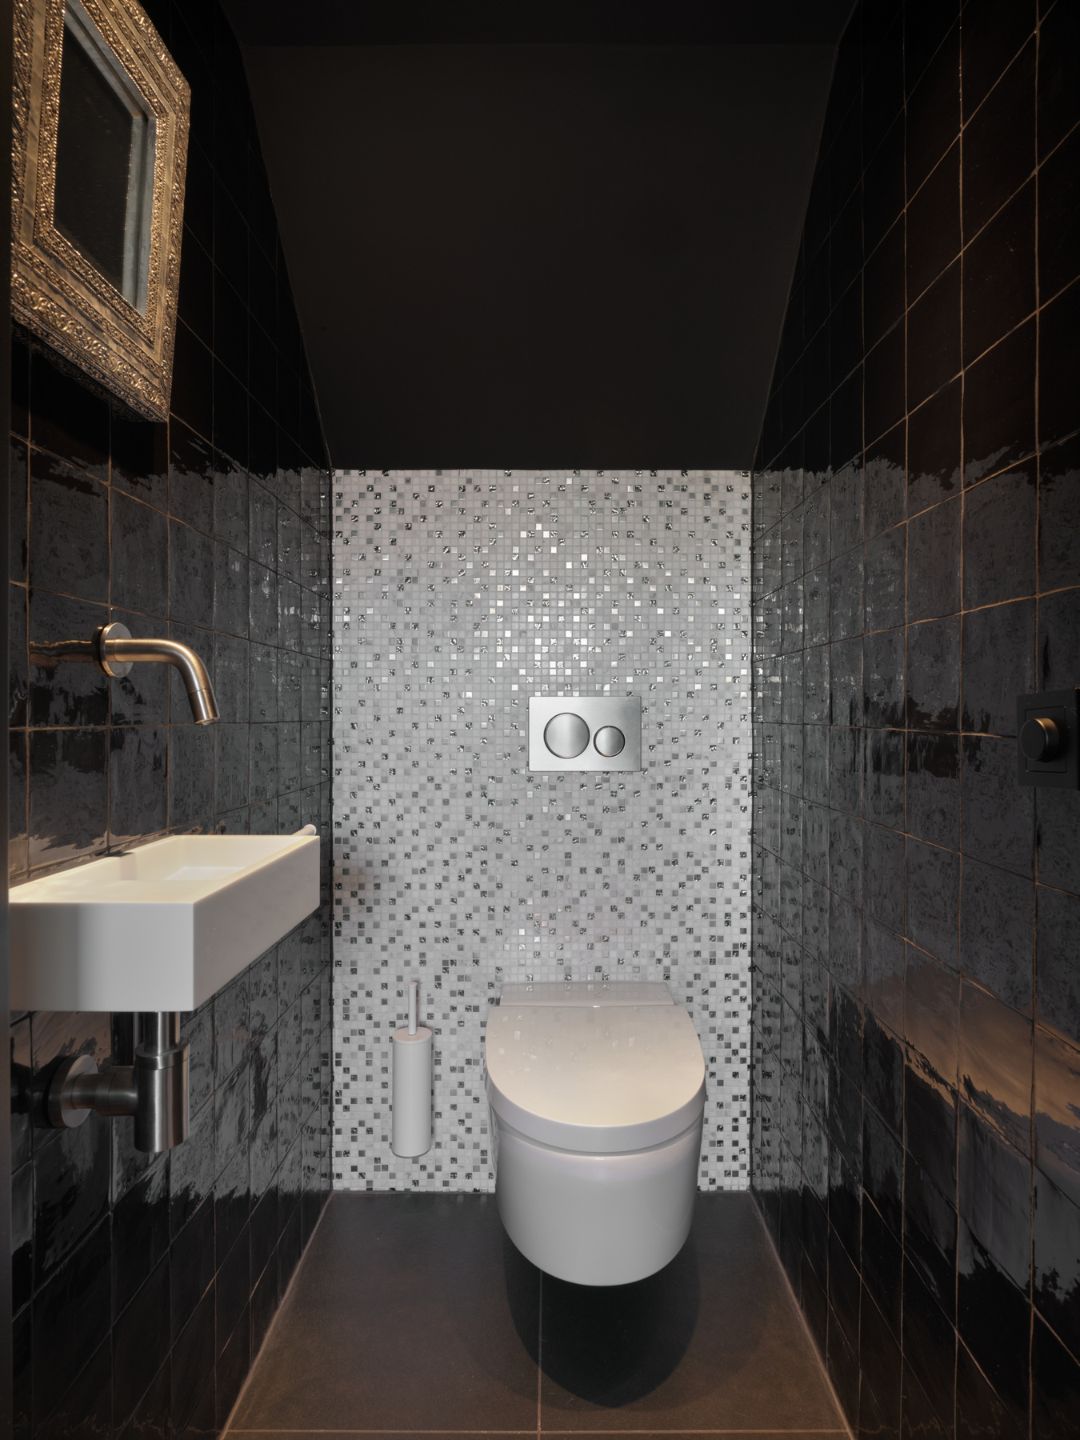 Foto: mozaiek tegel toilet